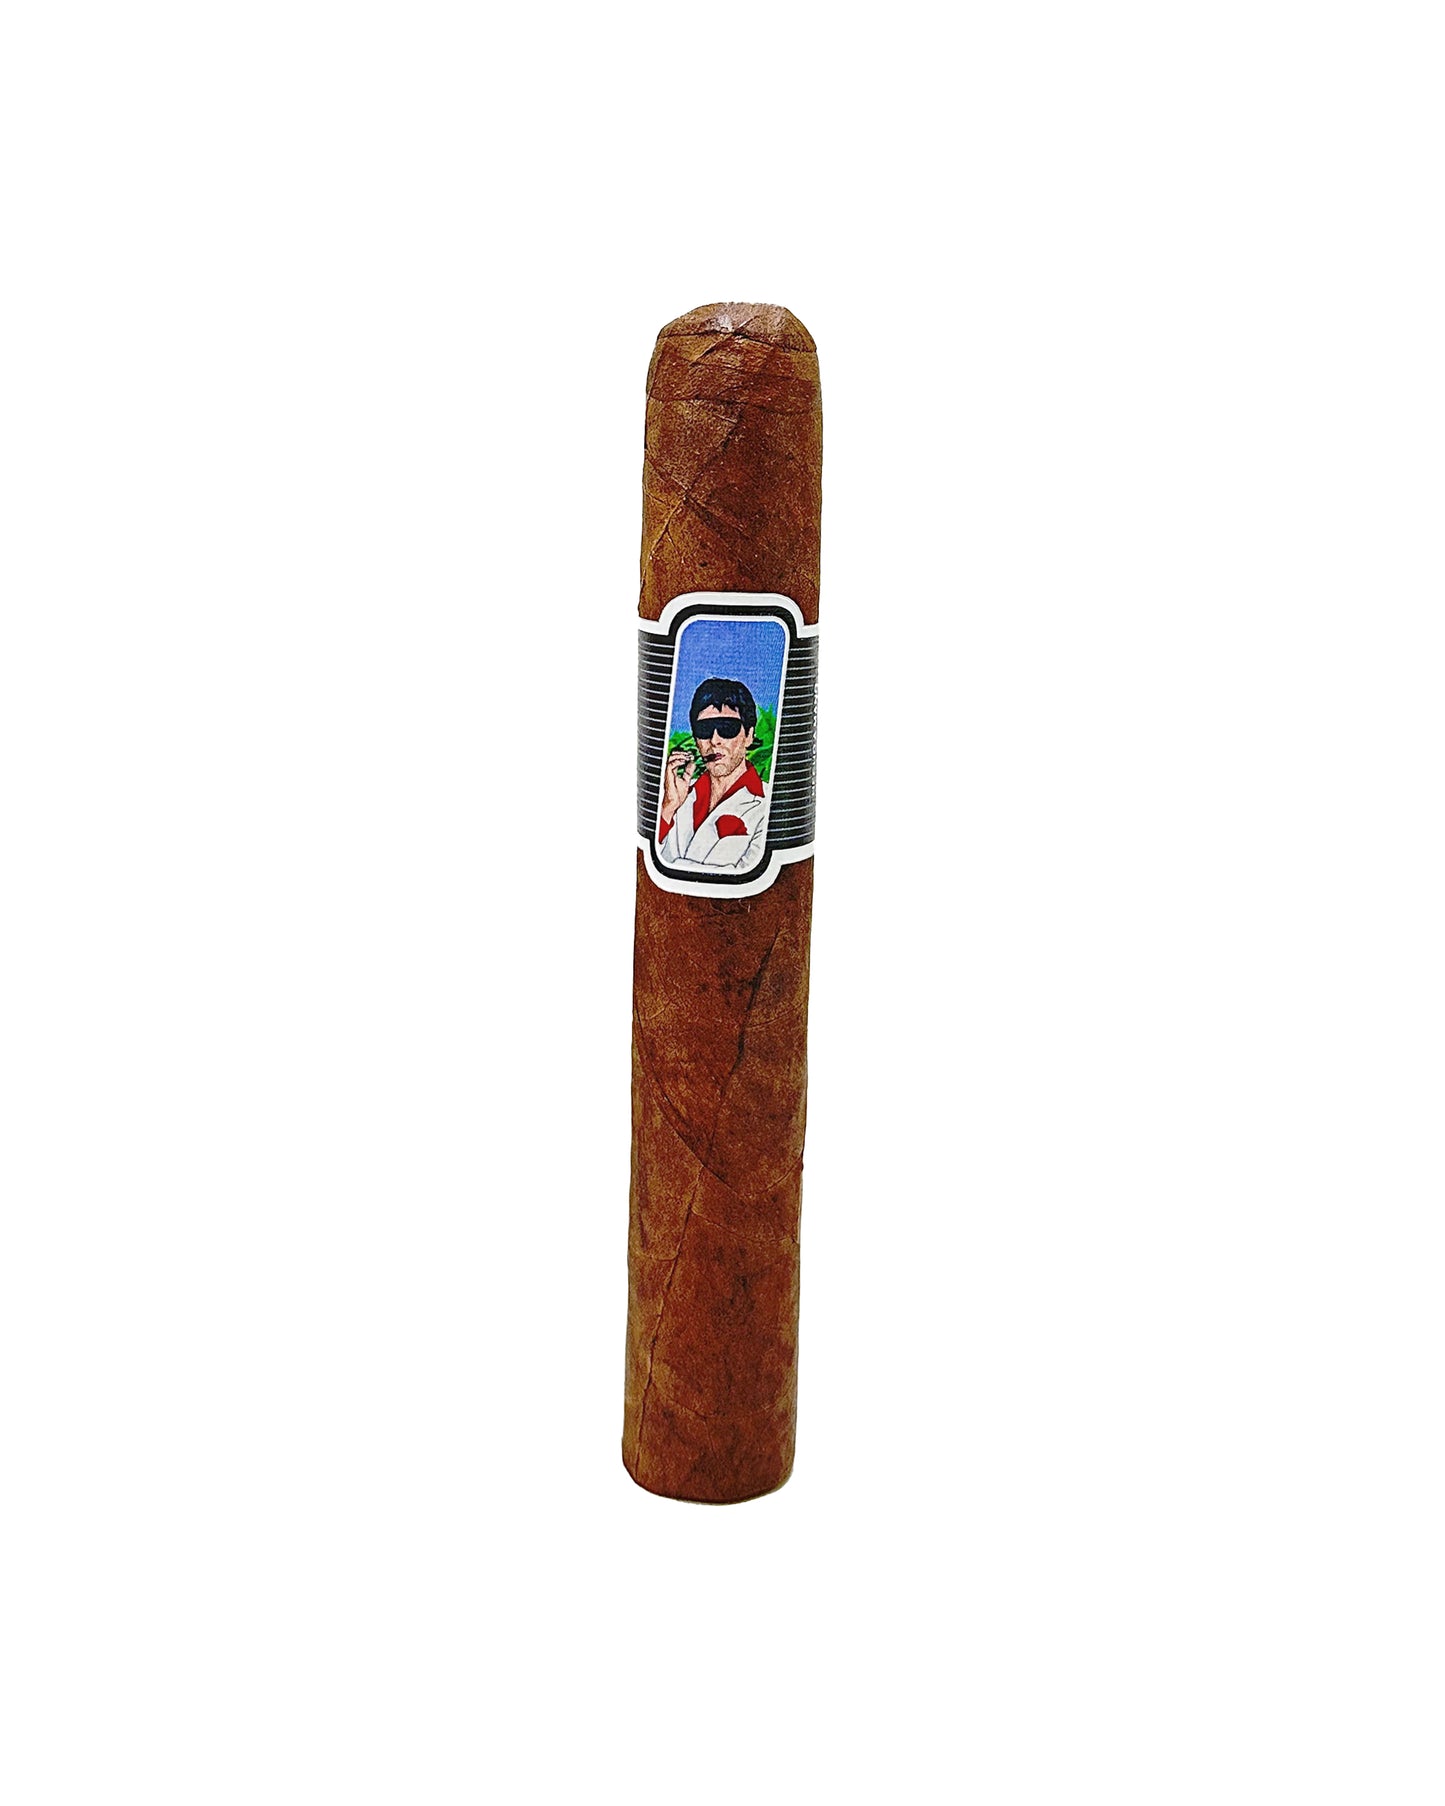 The Middle Man “Cigar Era”